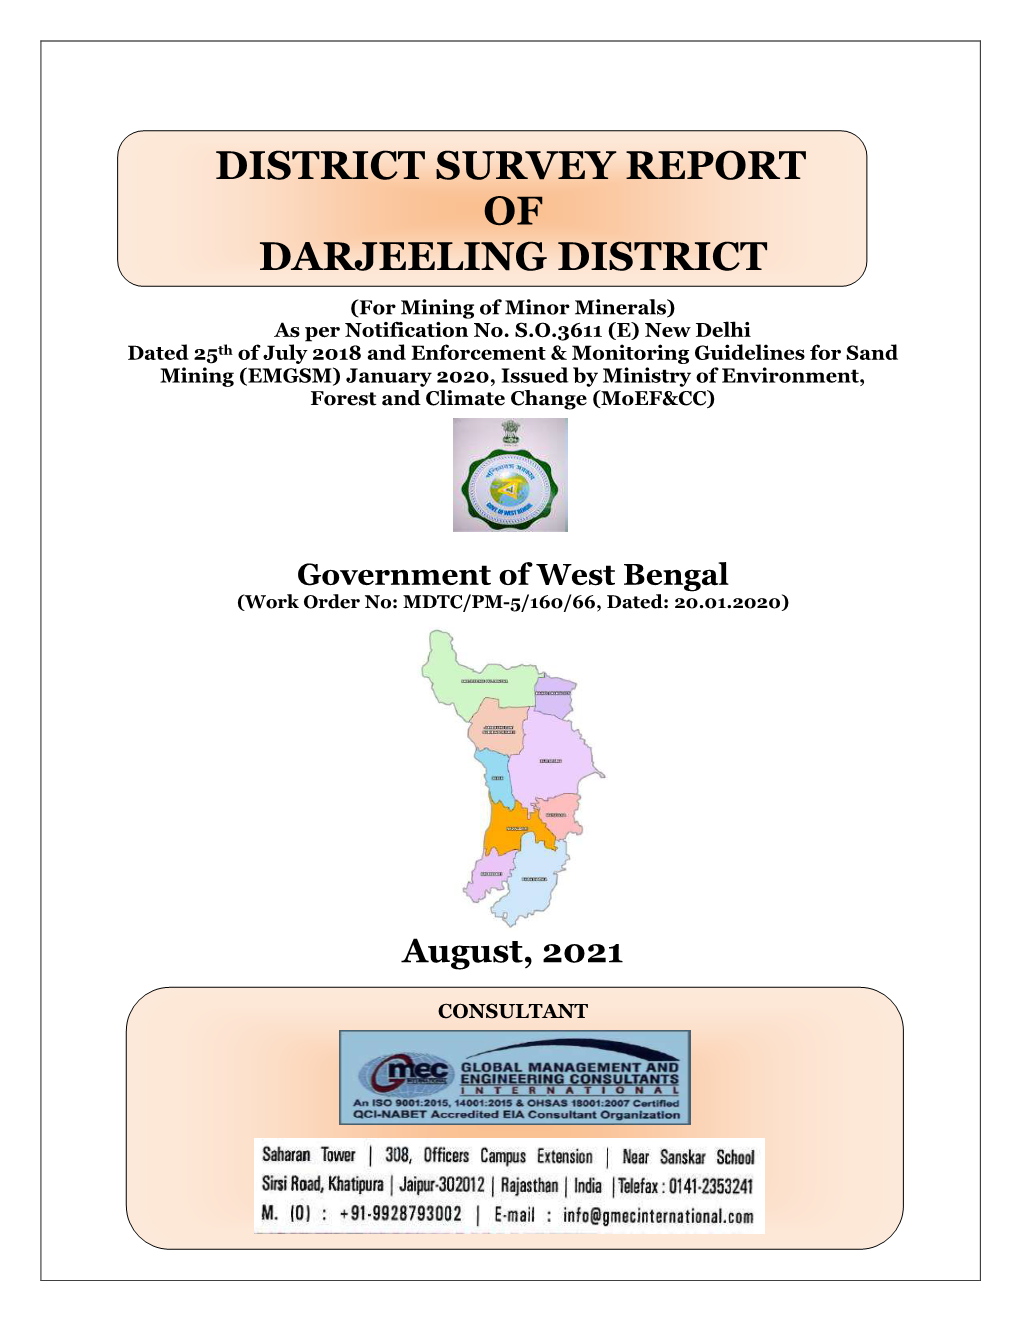 District Survey Report of Darjeeling District